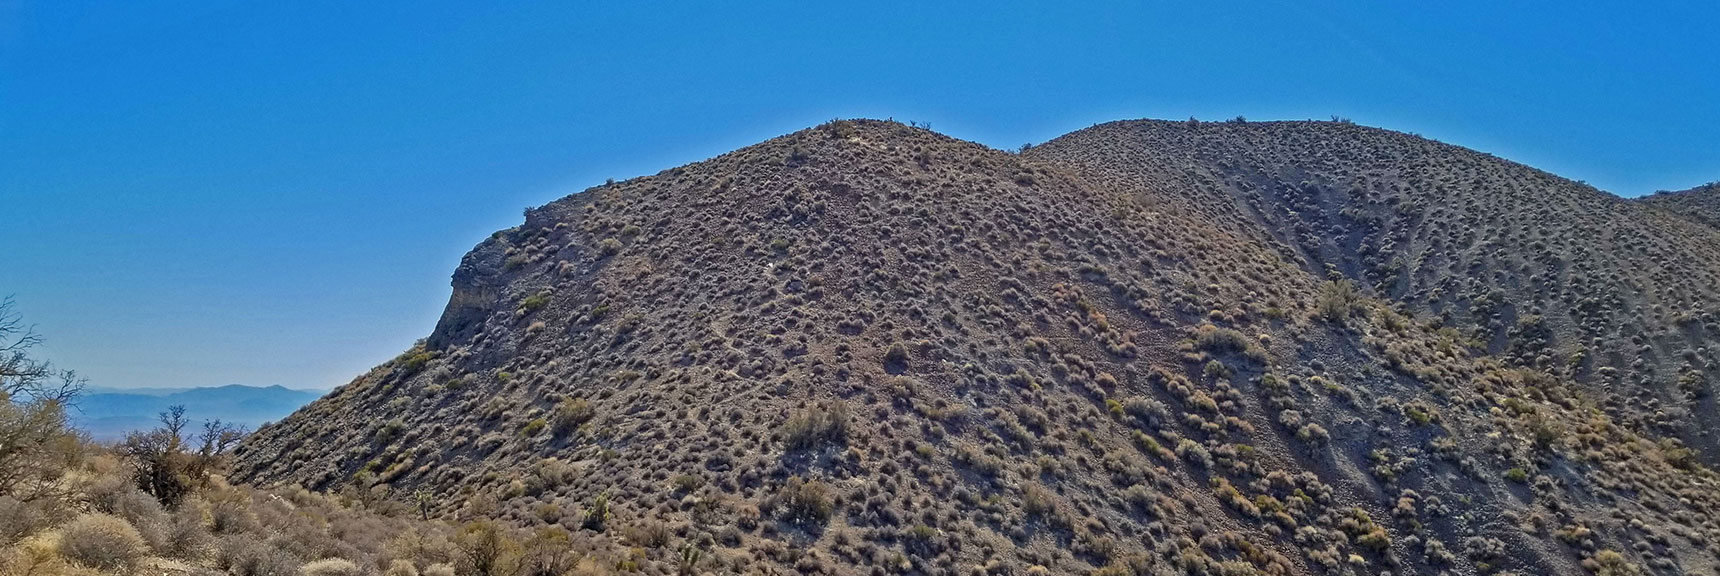 Successful Connection with Gass Peak Trail Just 5-900ft Below Summit Elevation! | Gass Peak Grand Crossing | Desert National Wildlife Refuge to Centennial Hills Las Vegas via Gass Peak Summit by Foot